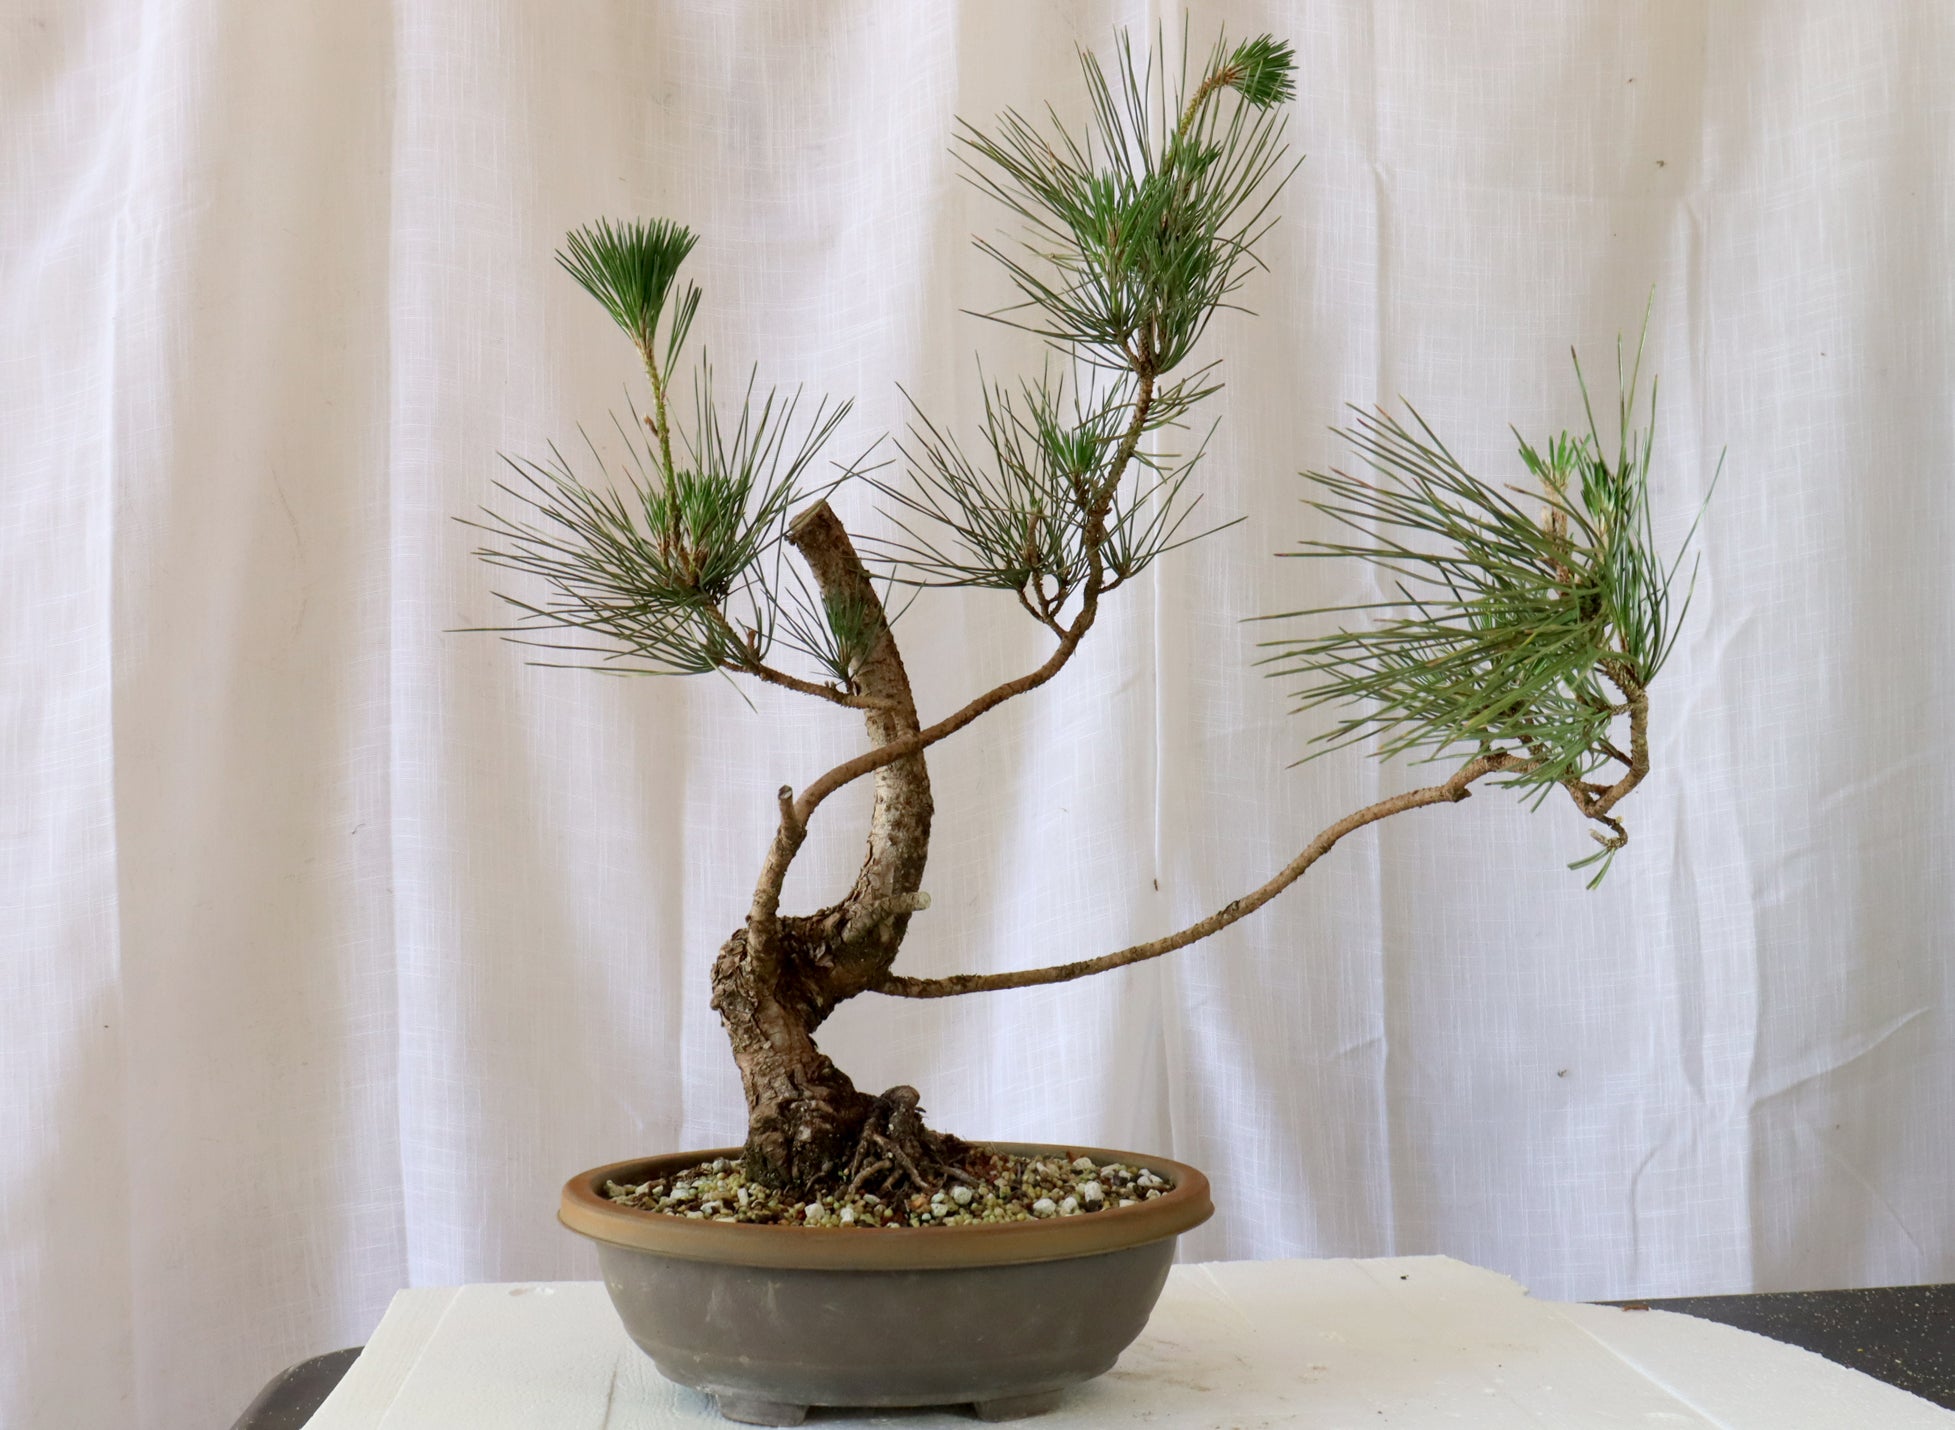 Japanese Black Pine Pre-Bonsai in a 12 Inch Plastic Trainer